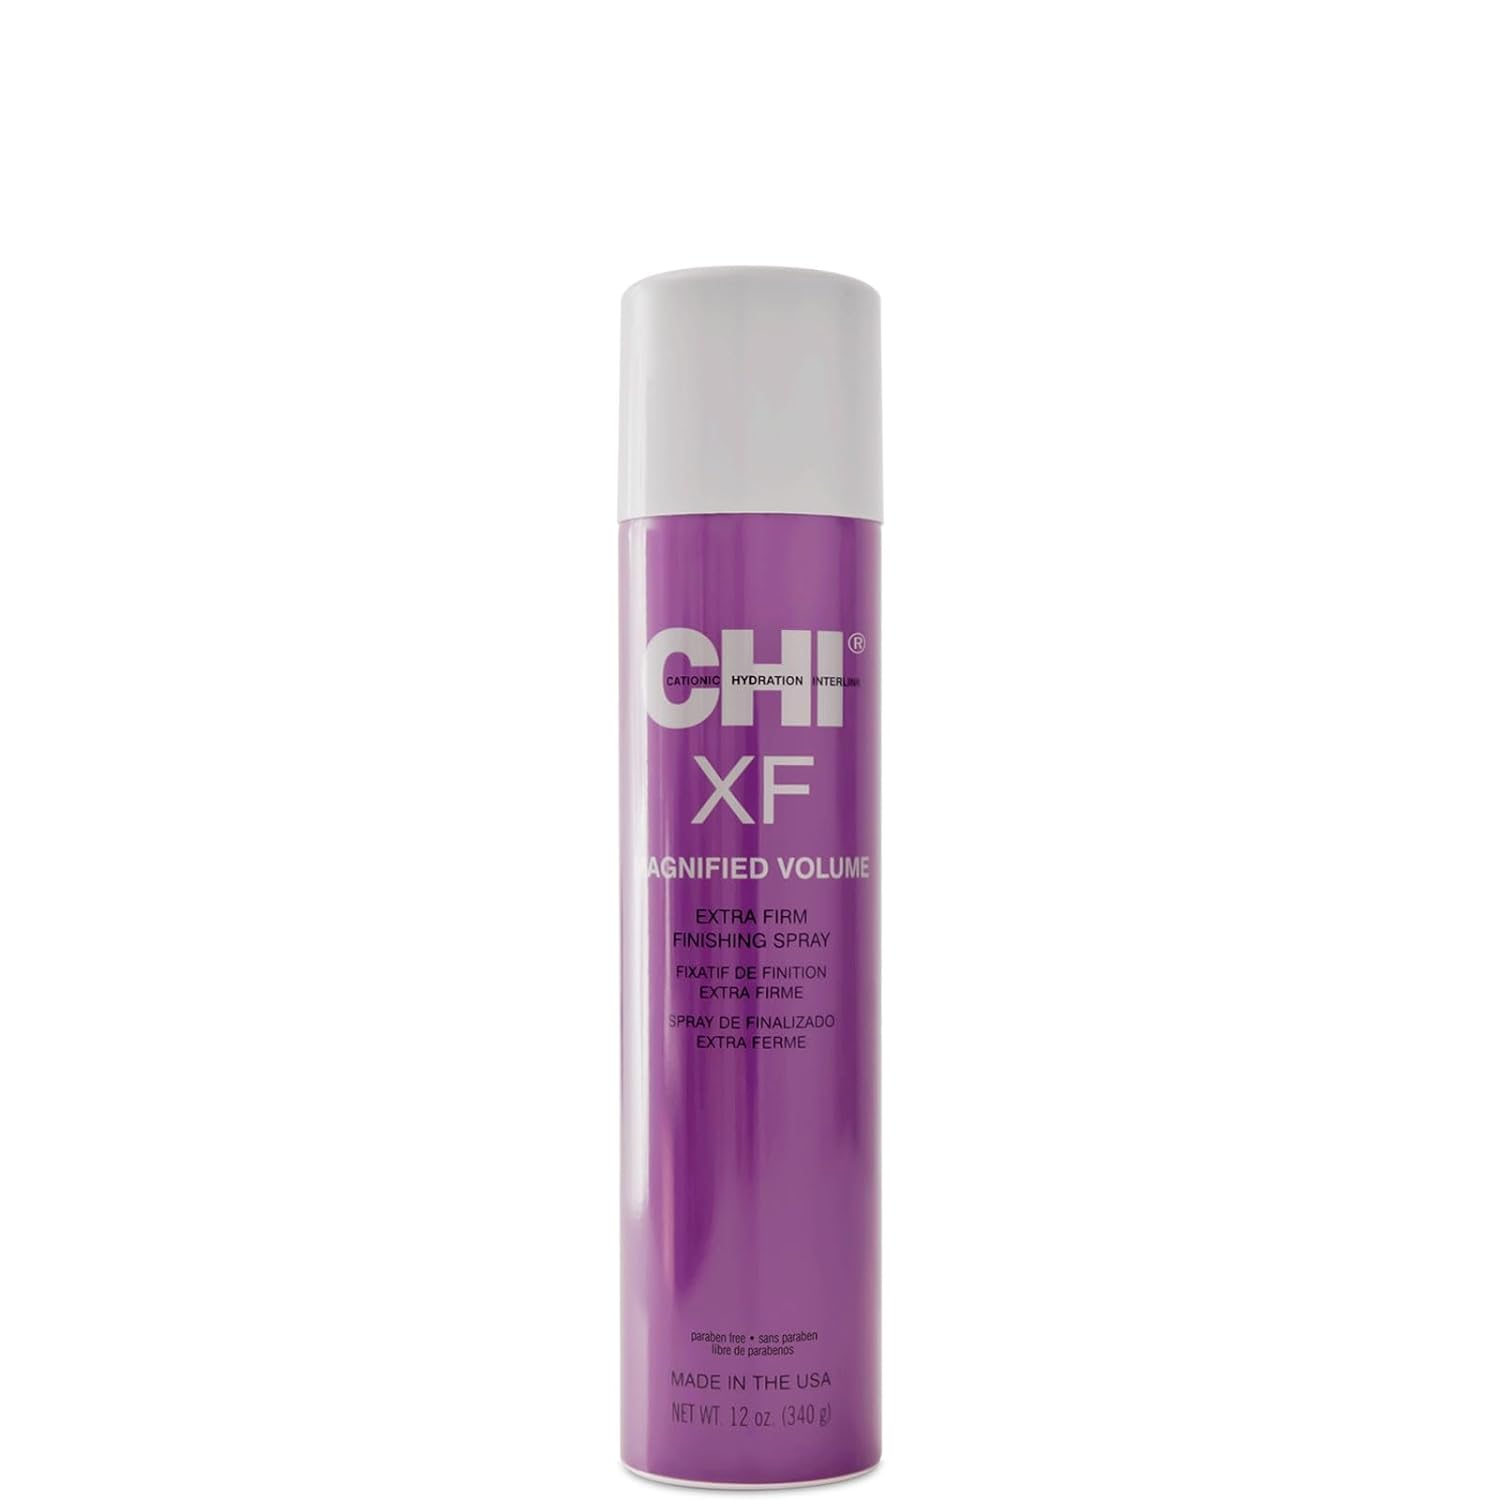 CHI Magnified Volume XF Finishing Hair Spray